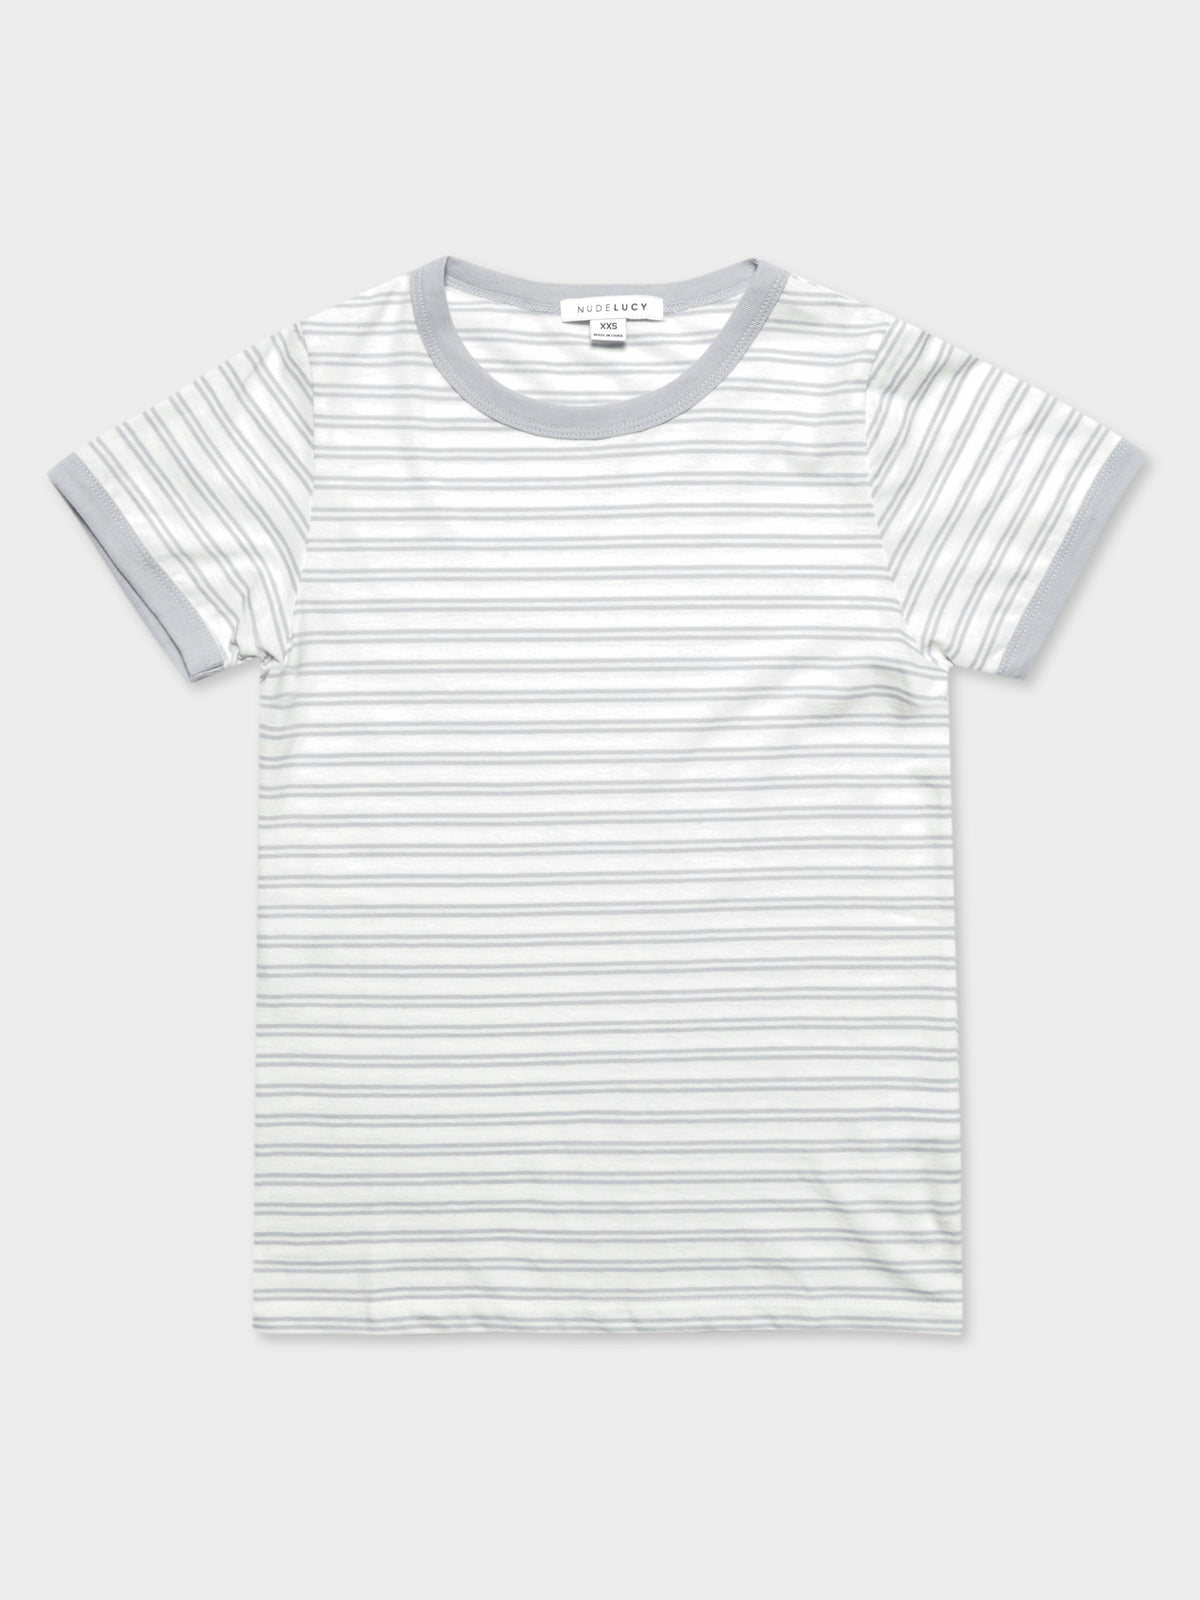 Salt Lake Ringer T-Shirt in Cloud Stripe